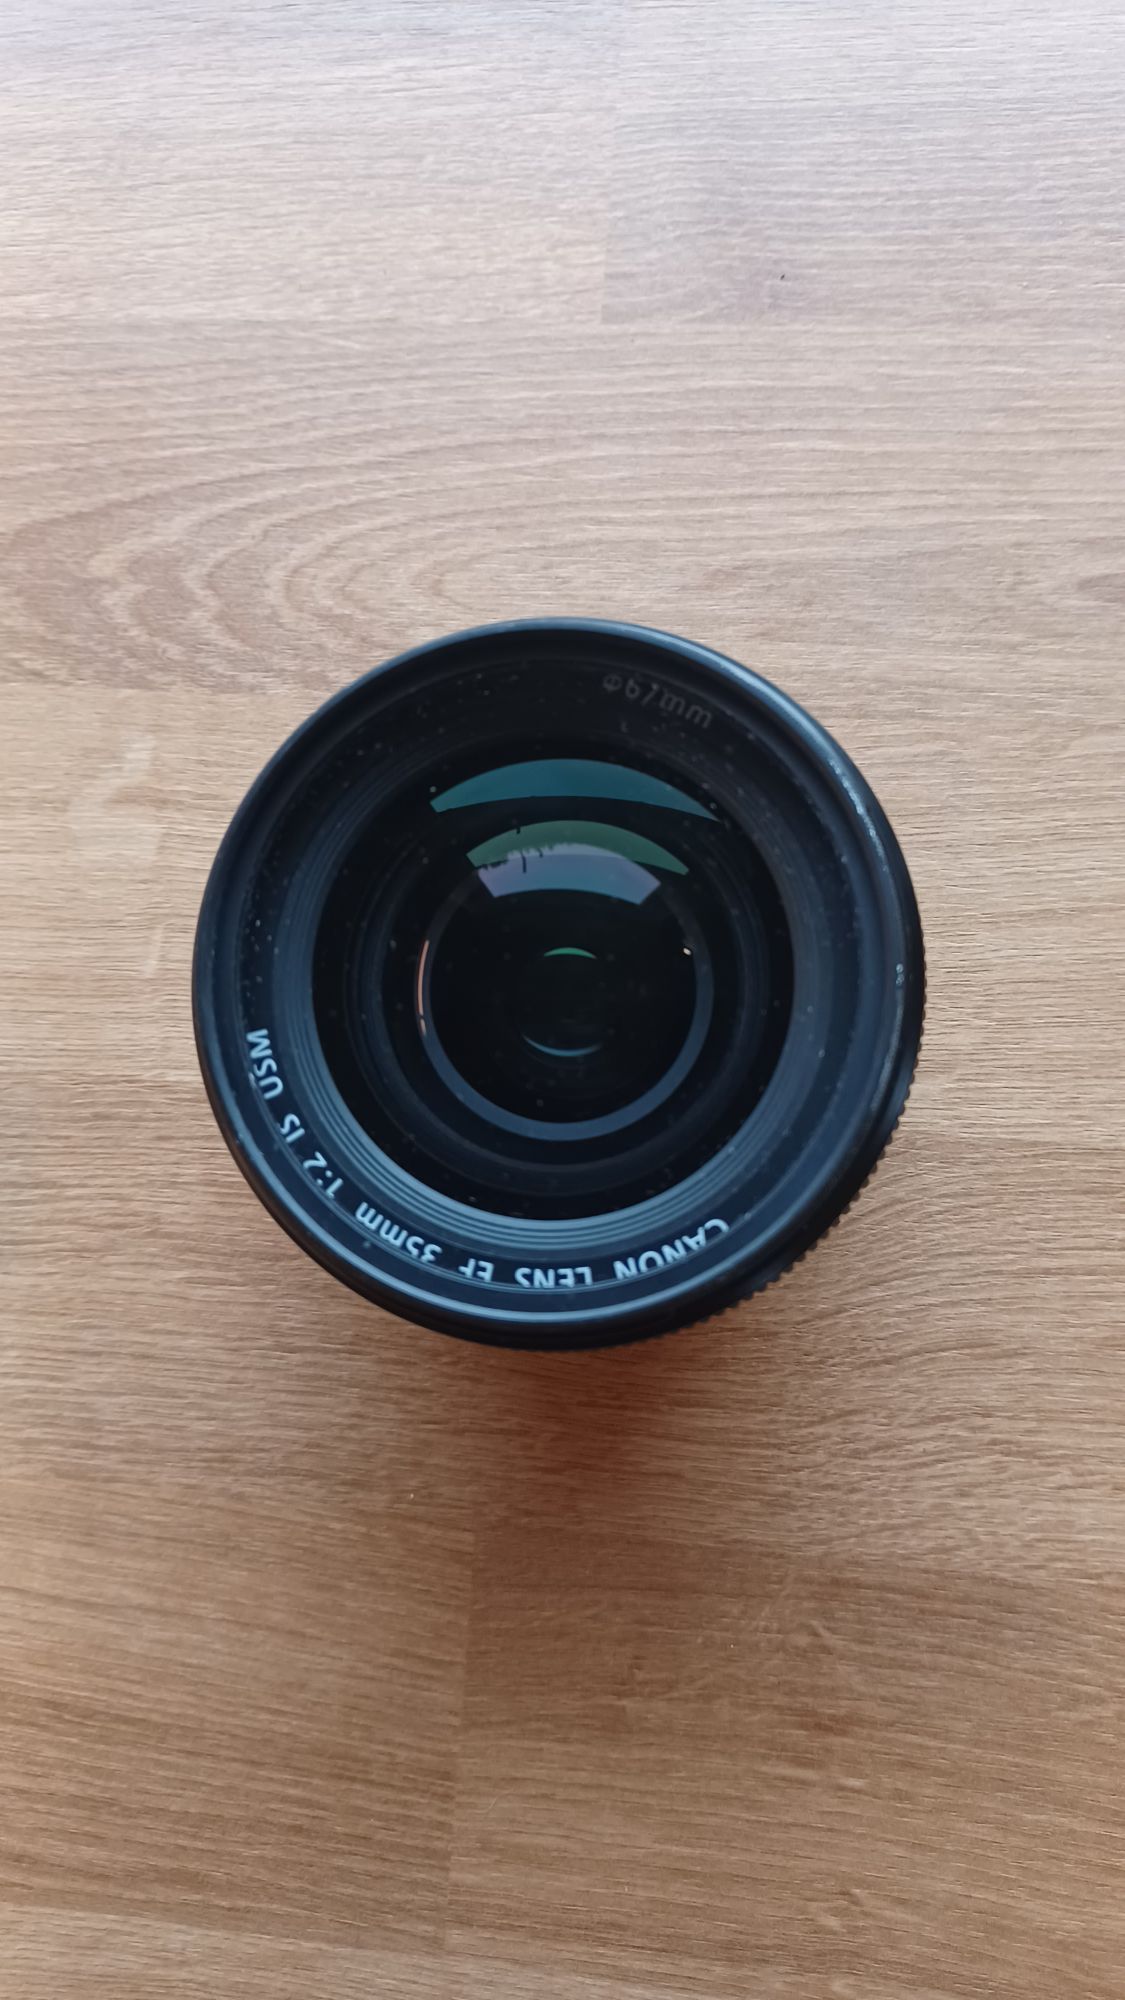 Cannon 35mm lens